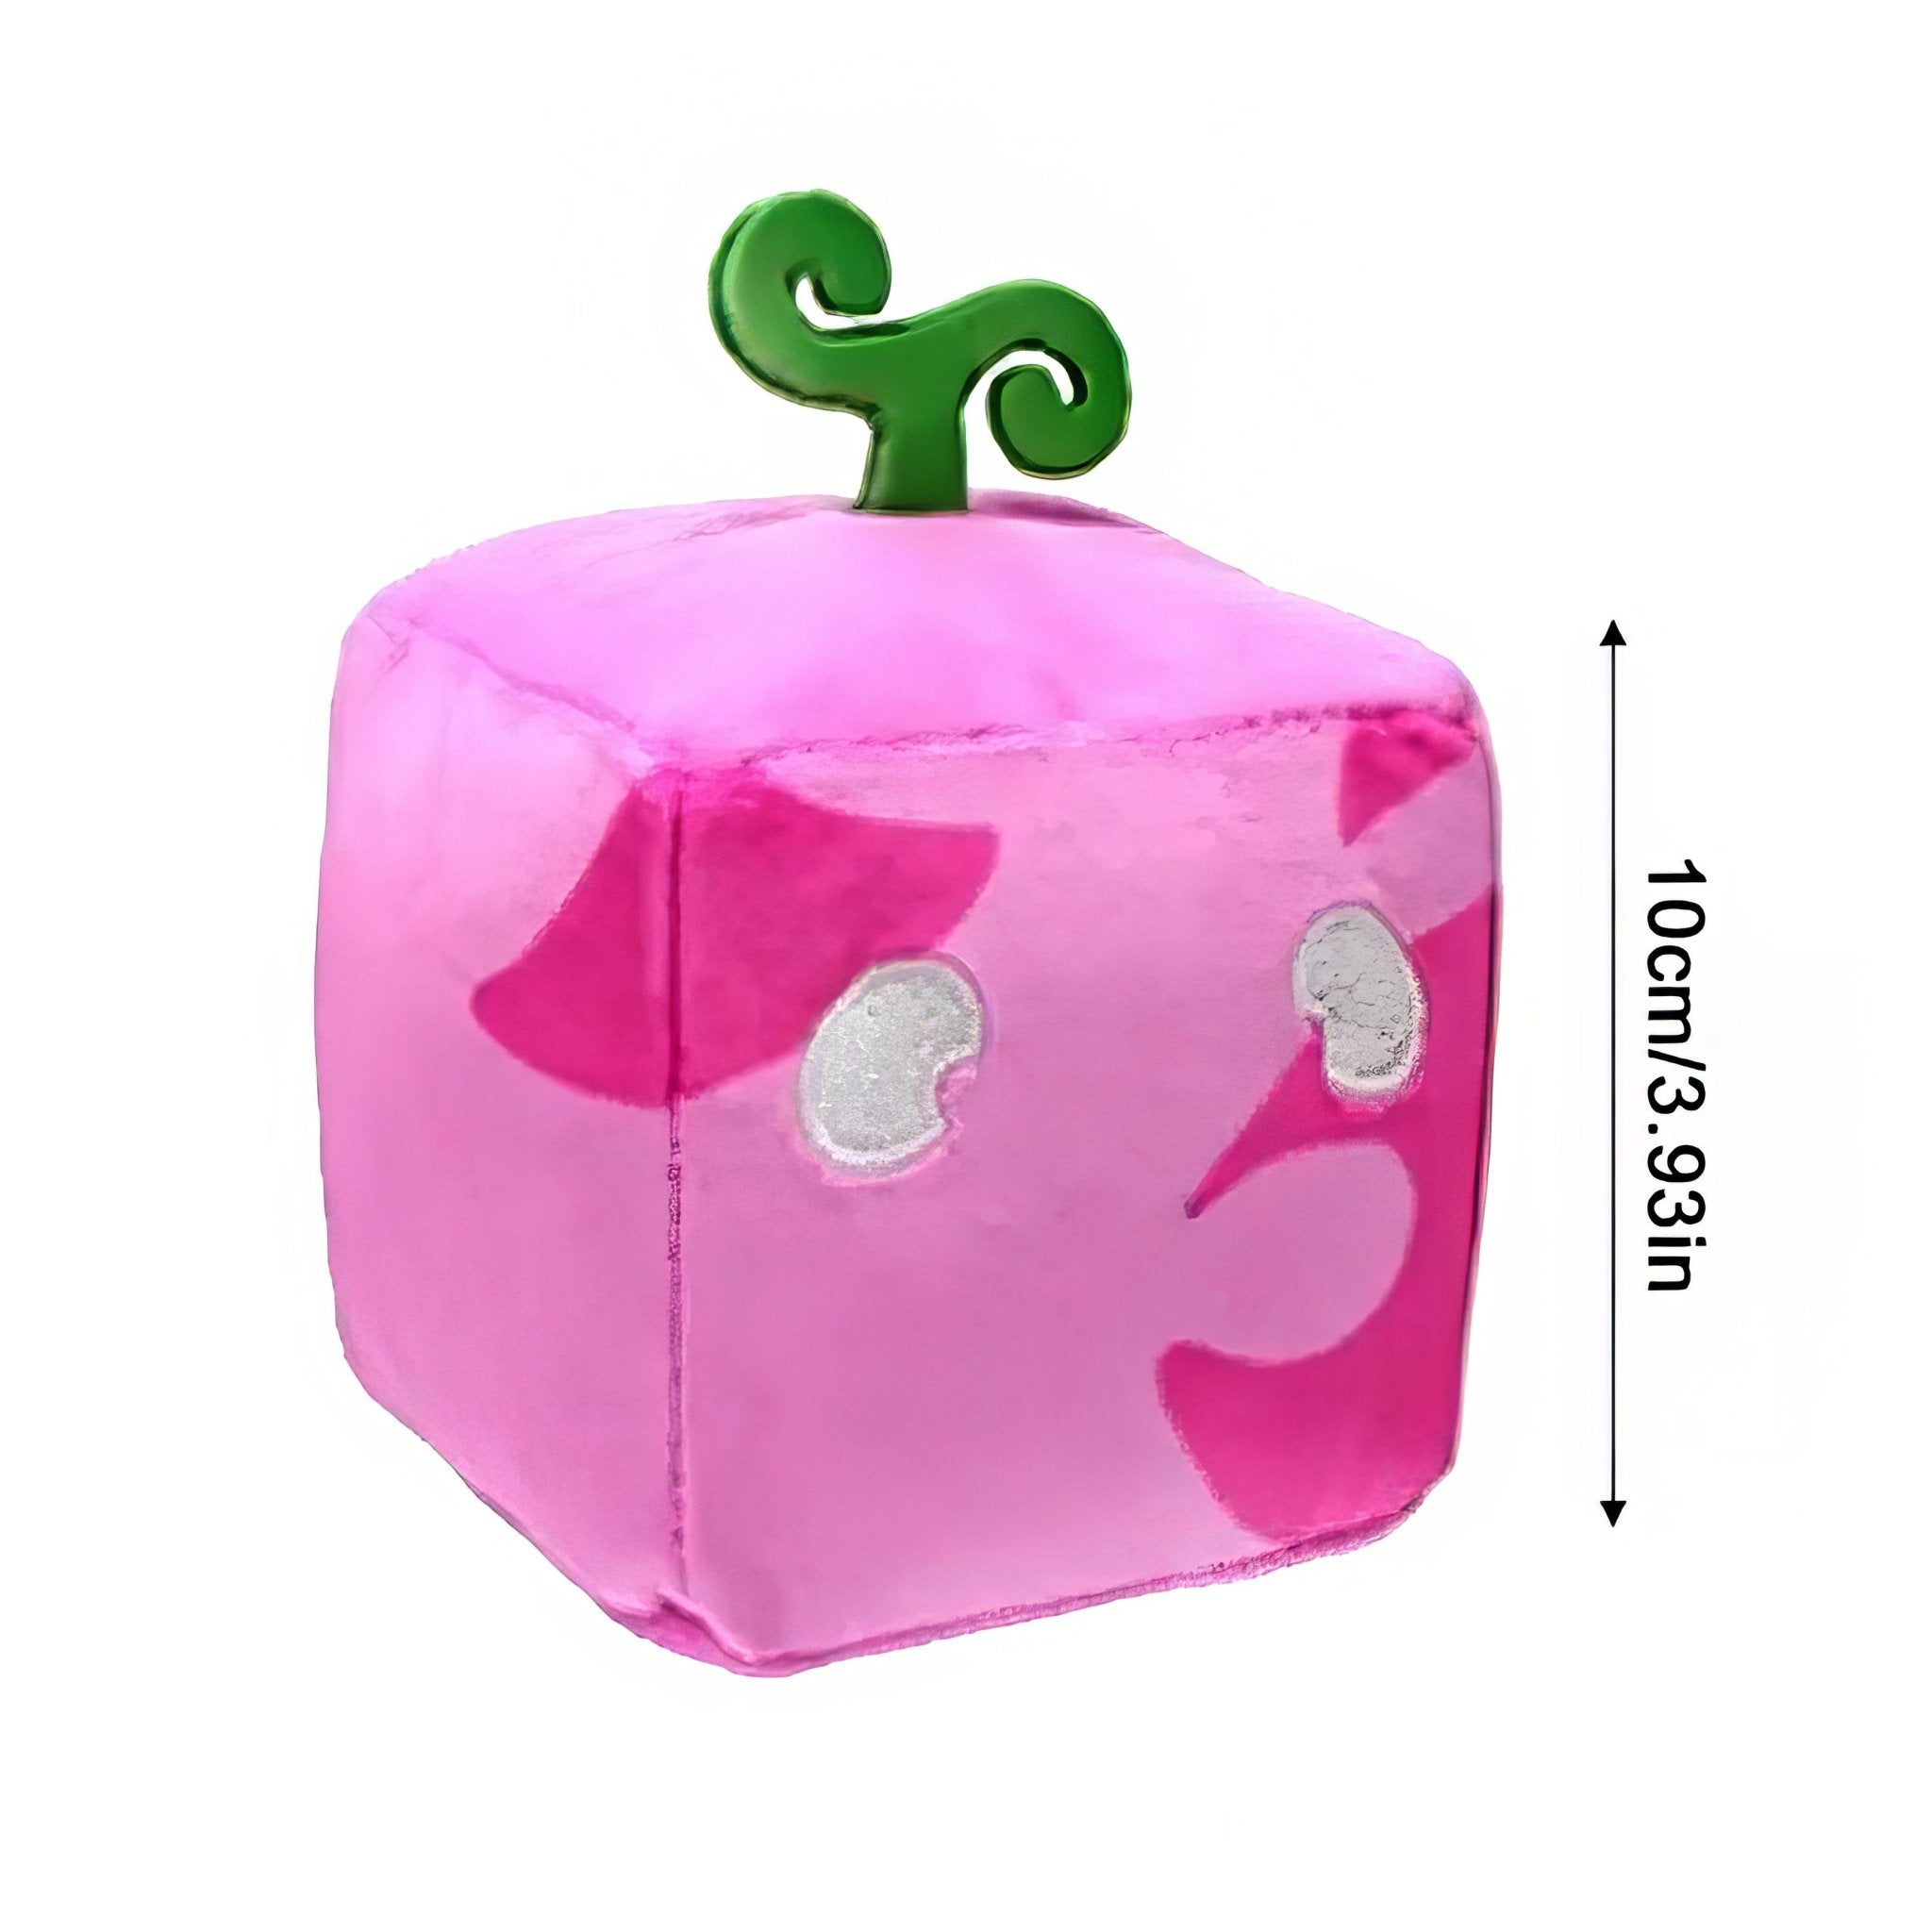 BLOX FRUITS PLUSH Toy Devil Fruit Stuffed Animal Soft And Cuddly $15.52 -  PicClick AU